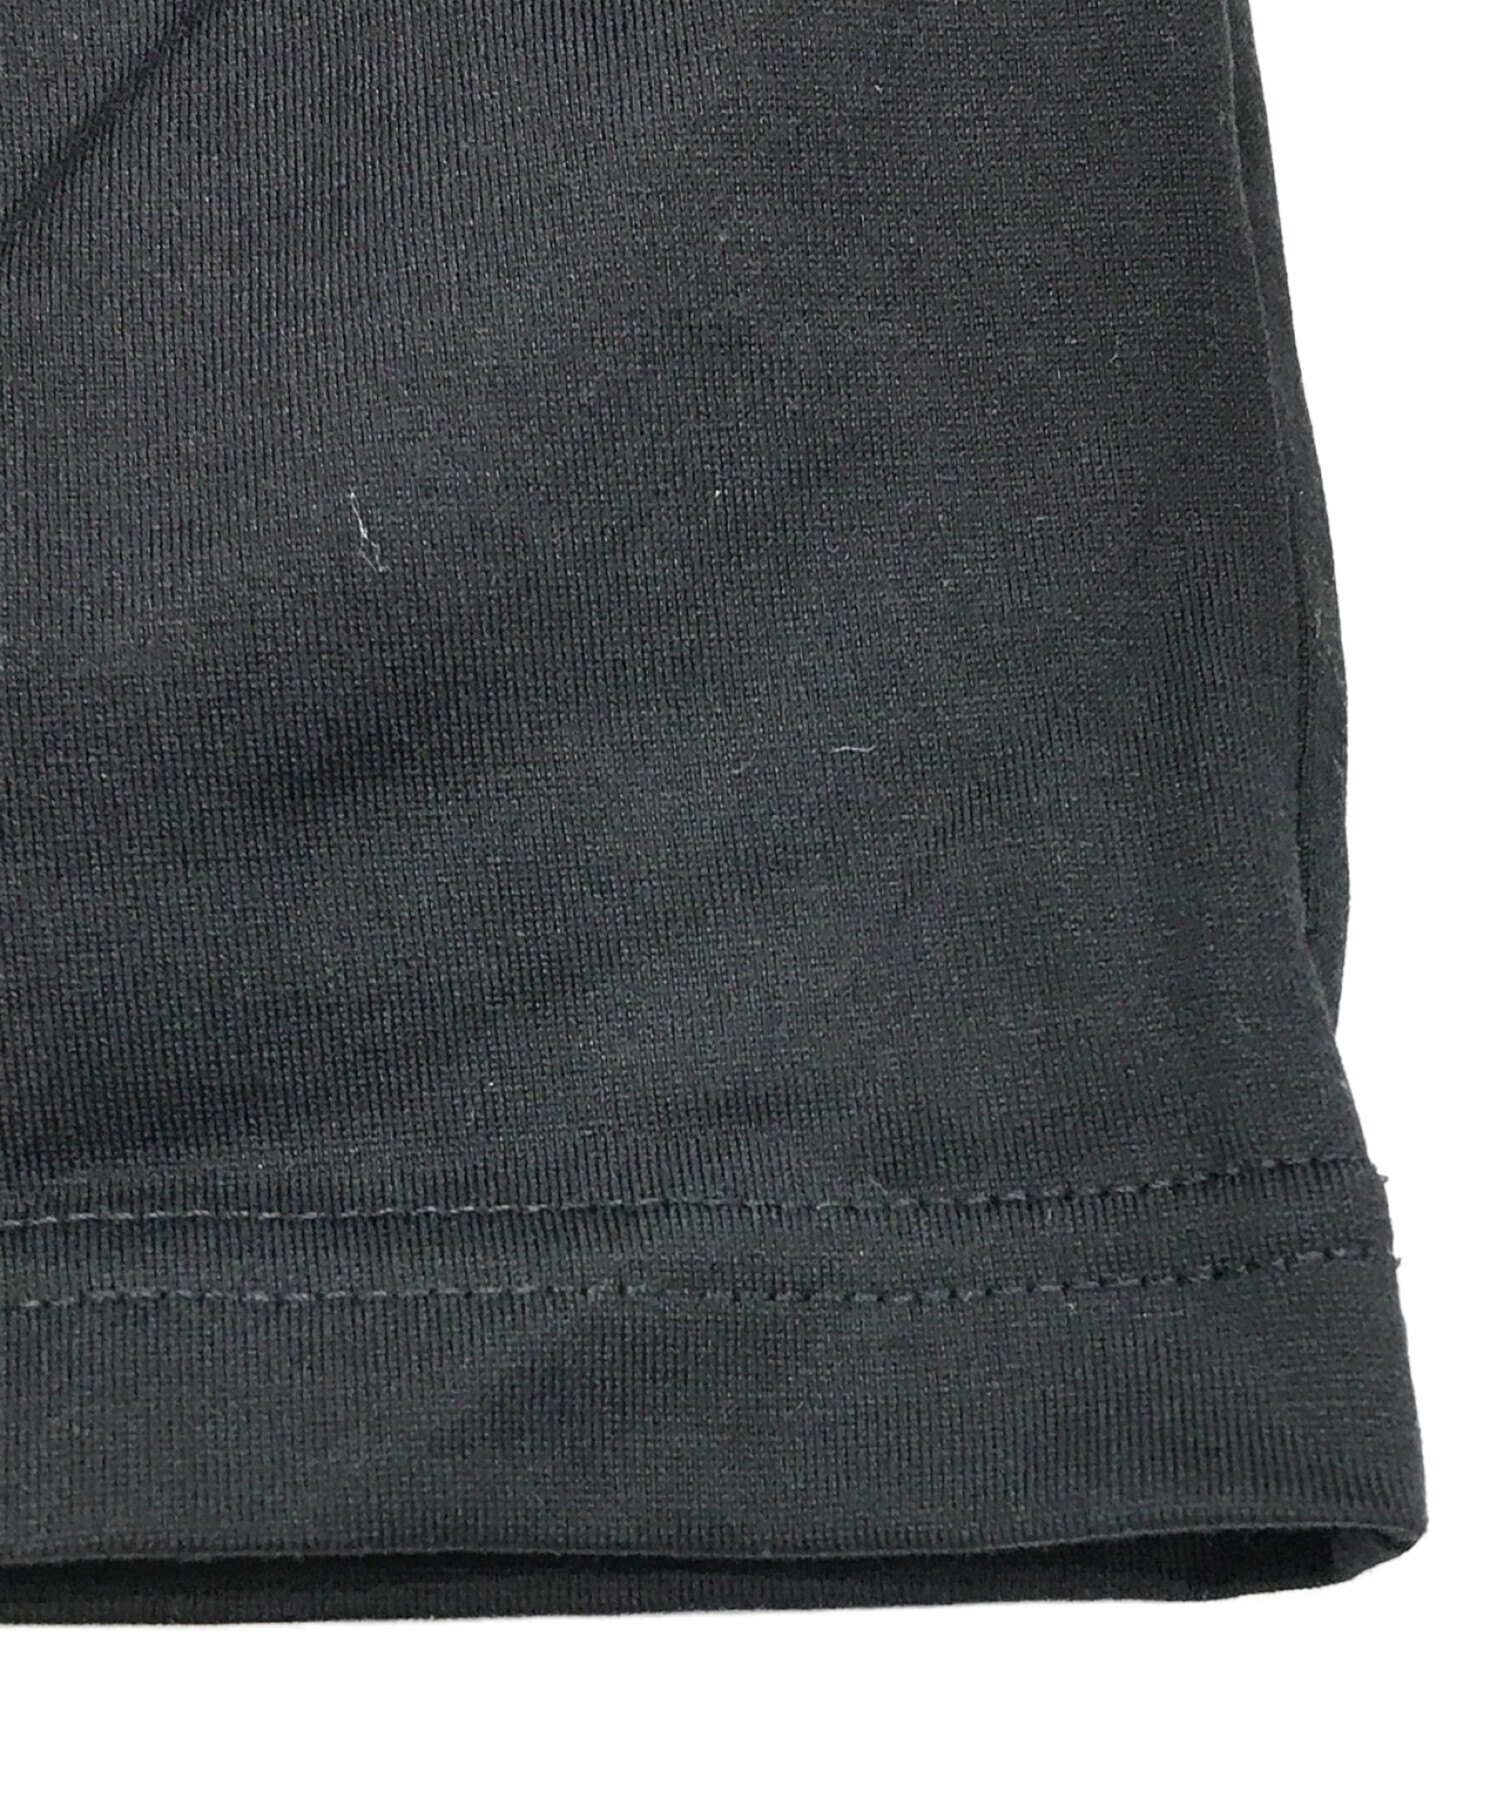 9A06_極美品 バーバリー 現行 フロントロゴ Tシャツ XL相当 ブラックTシャツ/カットソー(半袖/袖なし)